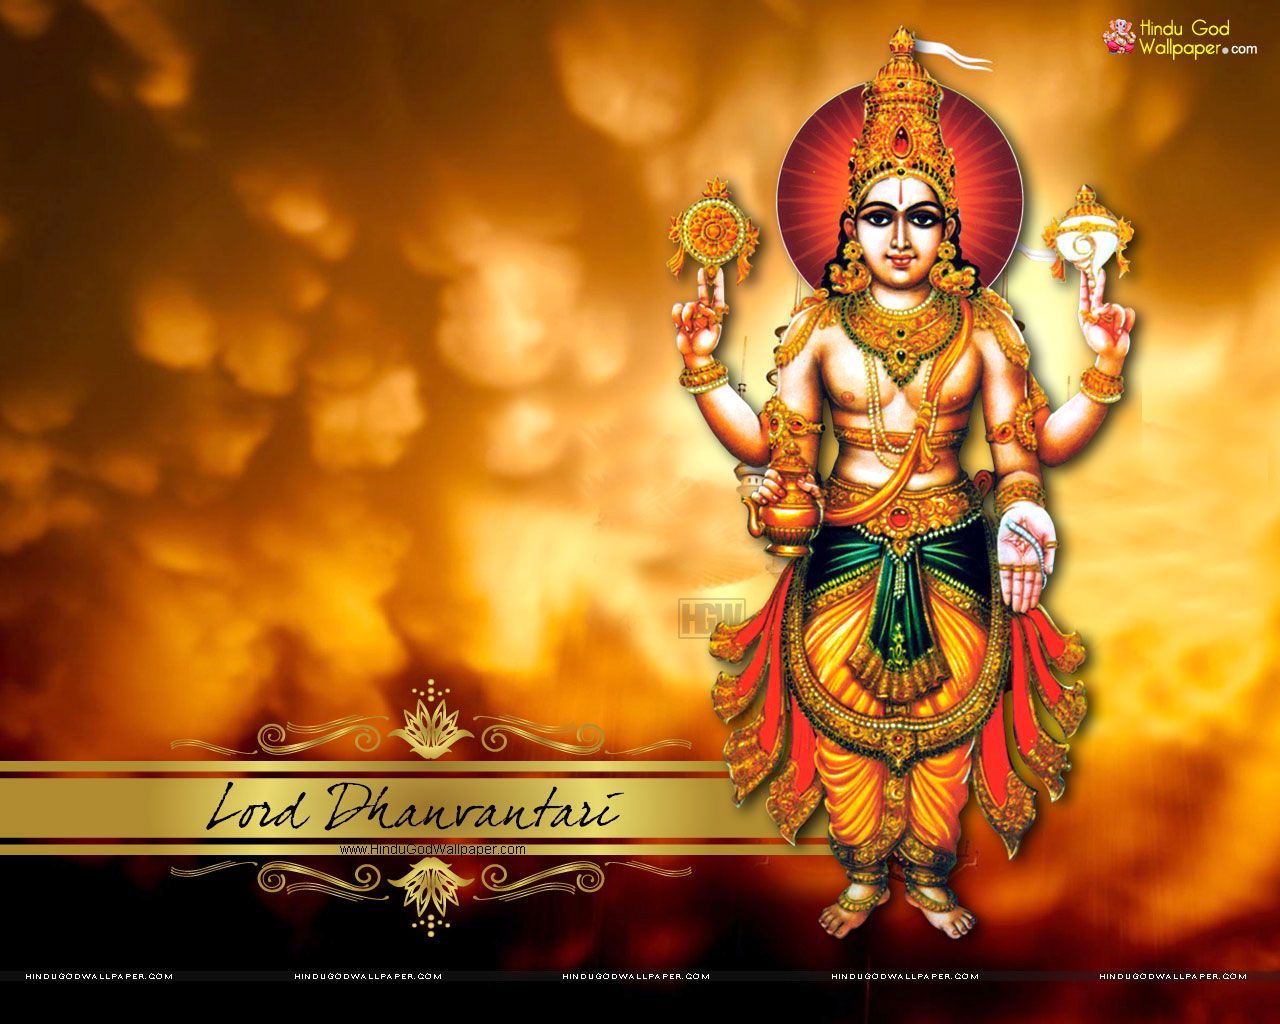 Dhanvantari. Hindu gods, God picture, Happy navratri image